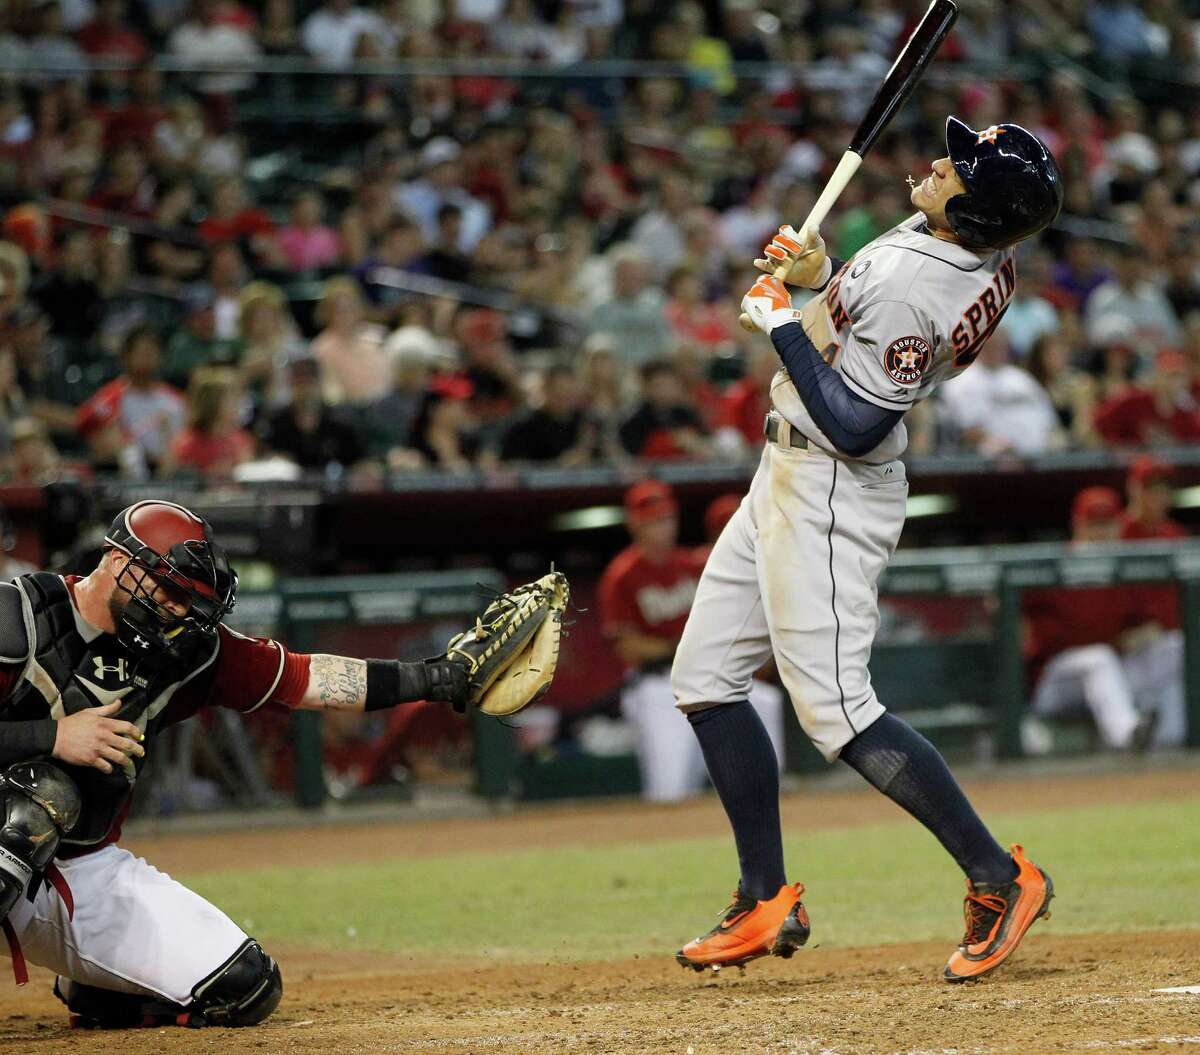 Houston Astros make young fan's birthday wish come true hitting home run